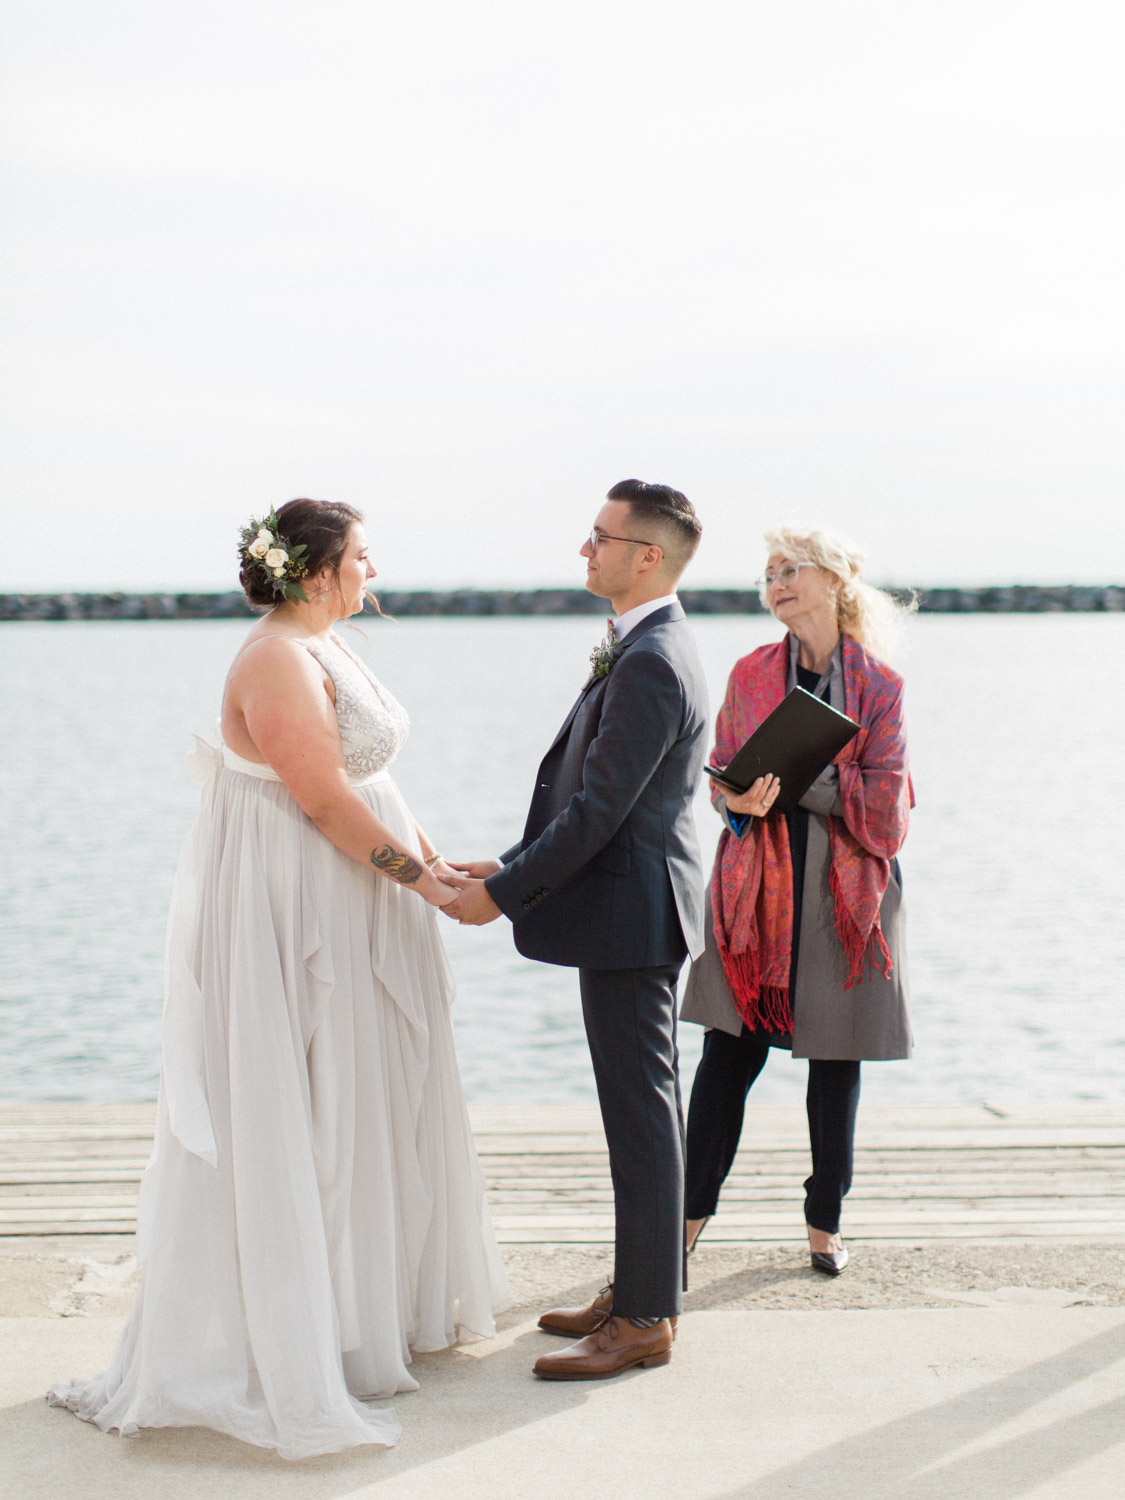 Toronto-wedding-photographer-alternative-downtown-waterfront-wedding-the-argonauts-rowing-club62.jpg